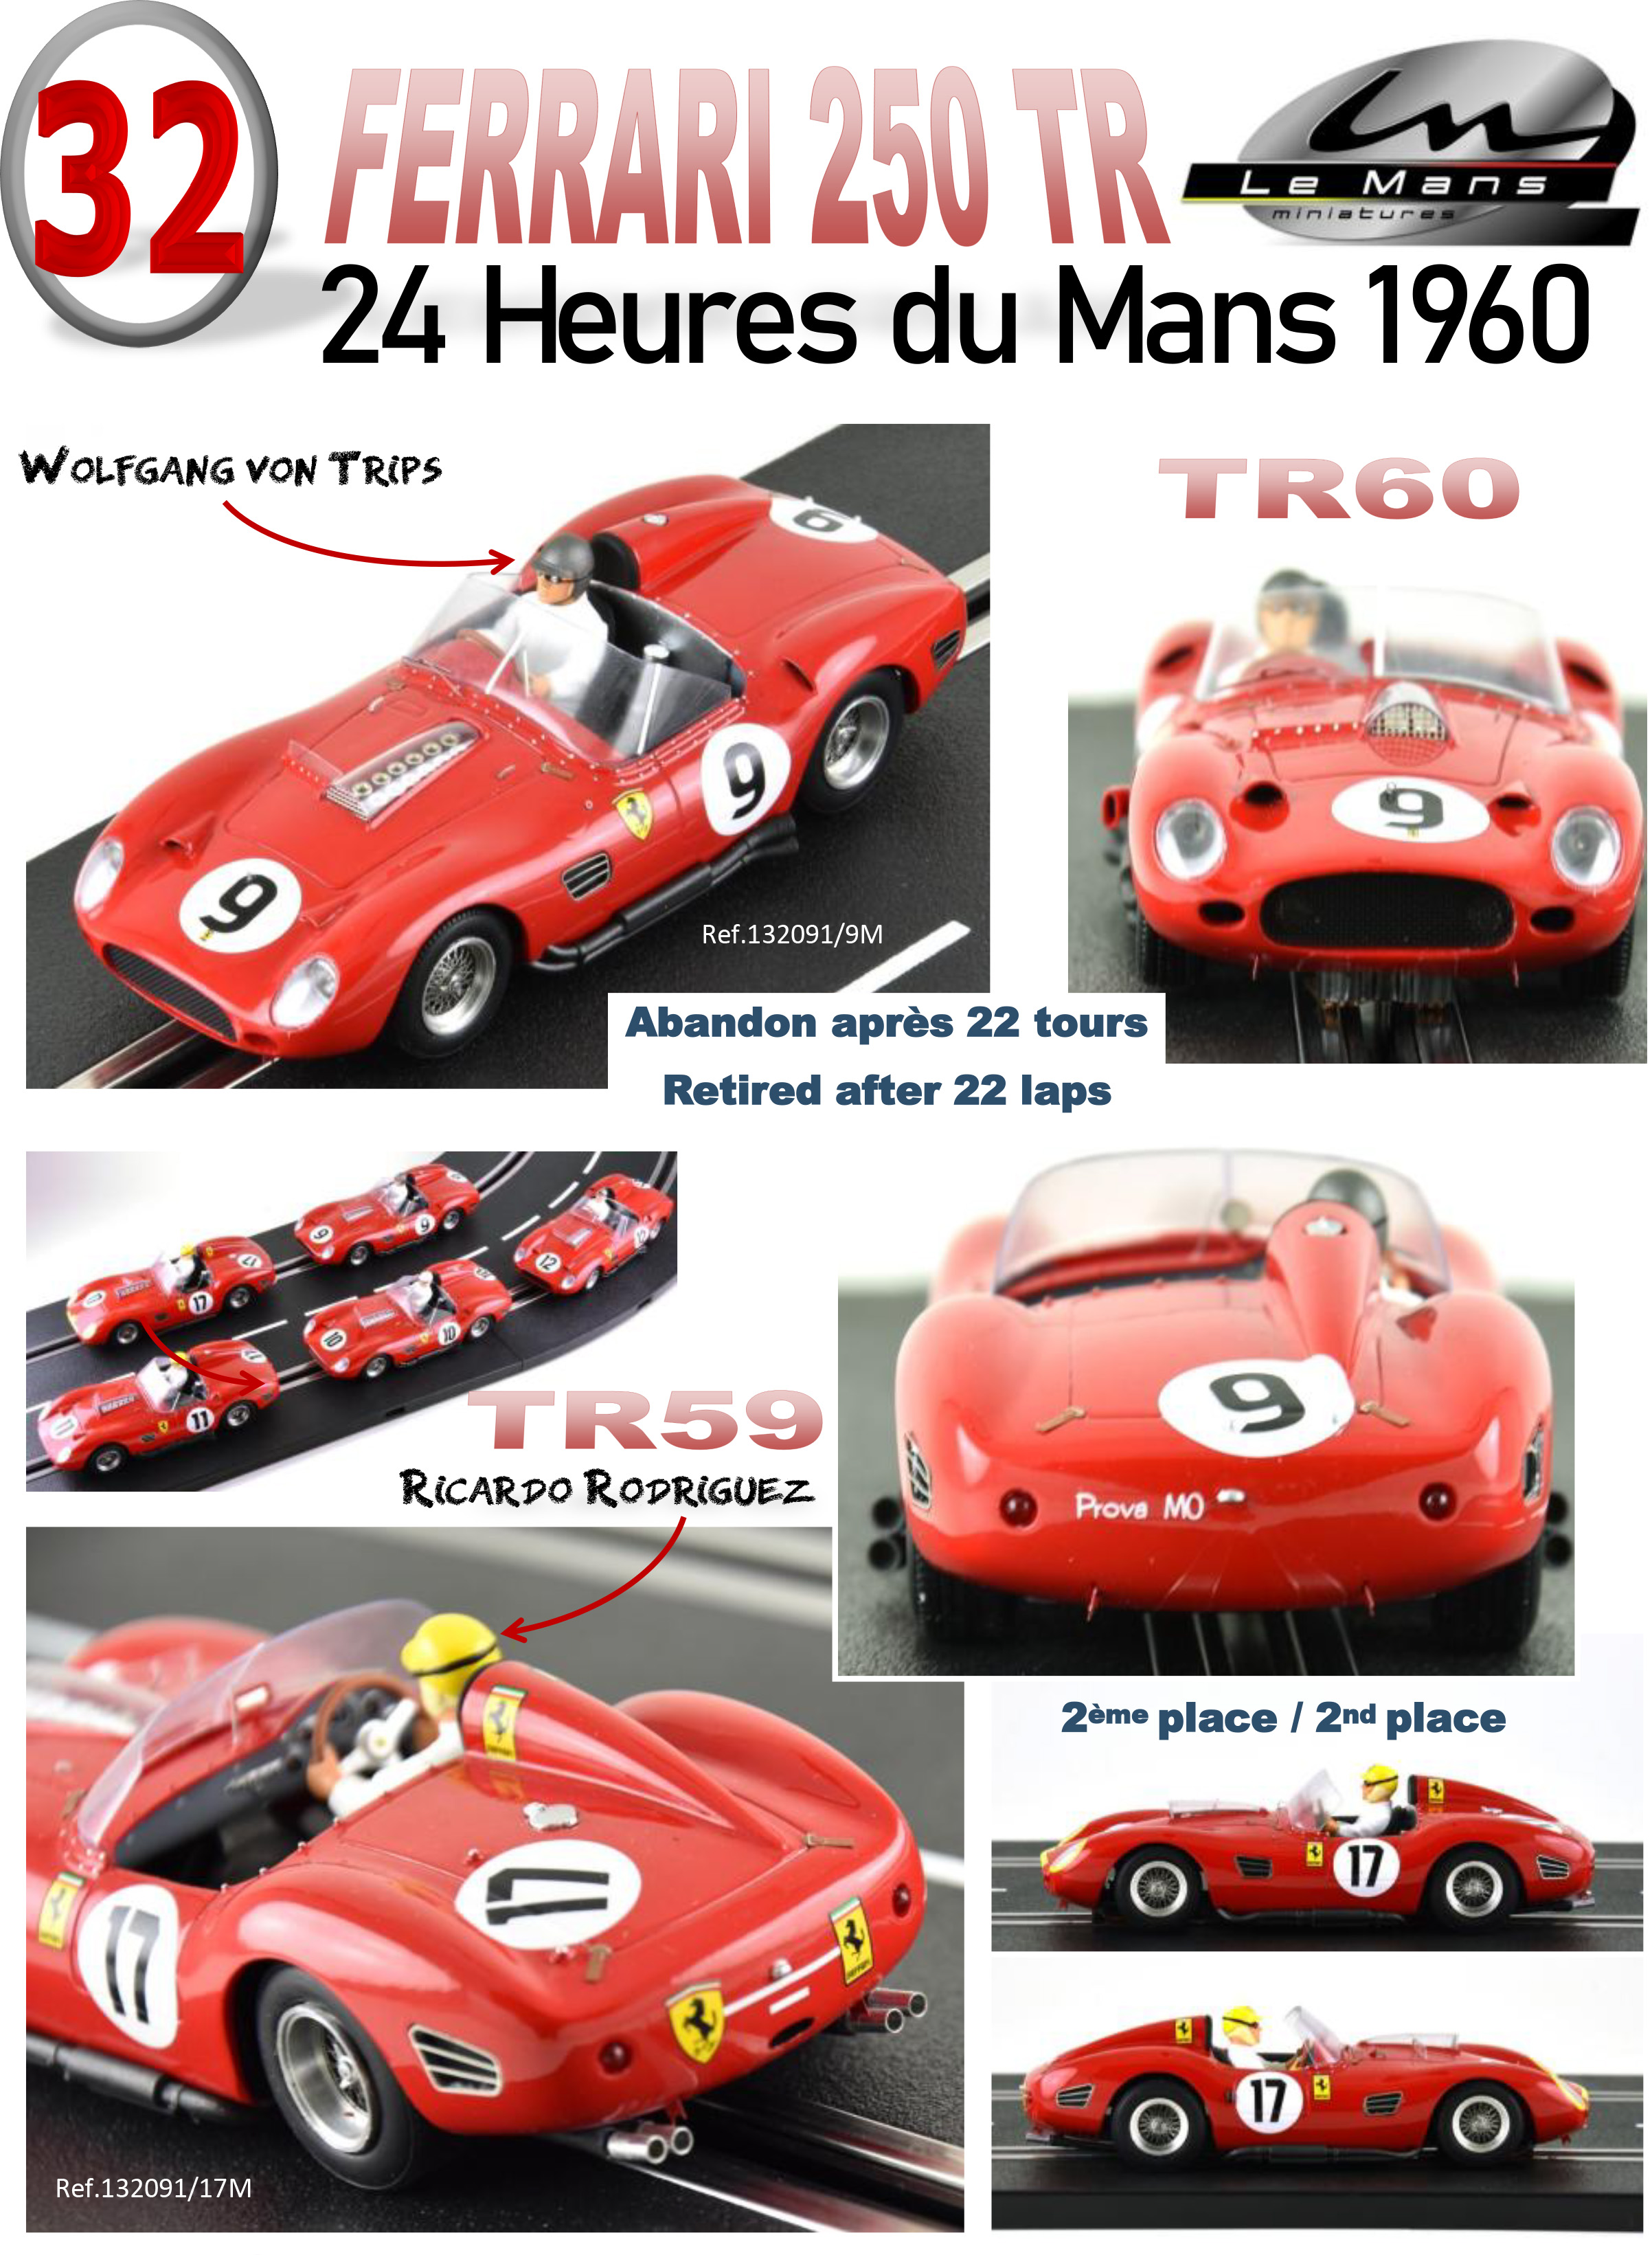 IXO Ferrari 250 TR59/60 Le Mans 24 Hour Win 1960 Gendebien Frere LM1960 1/43 NEW 